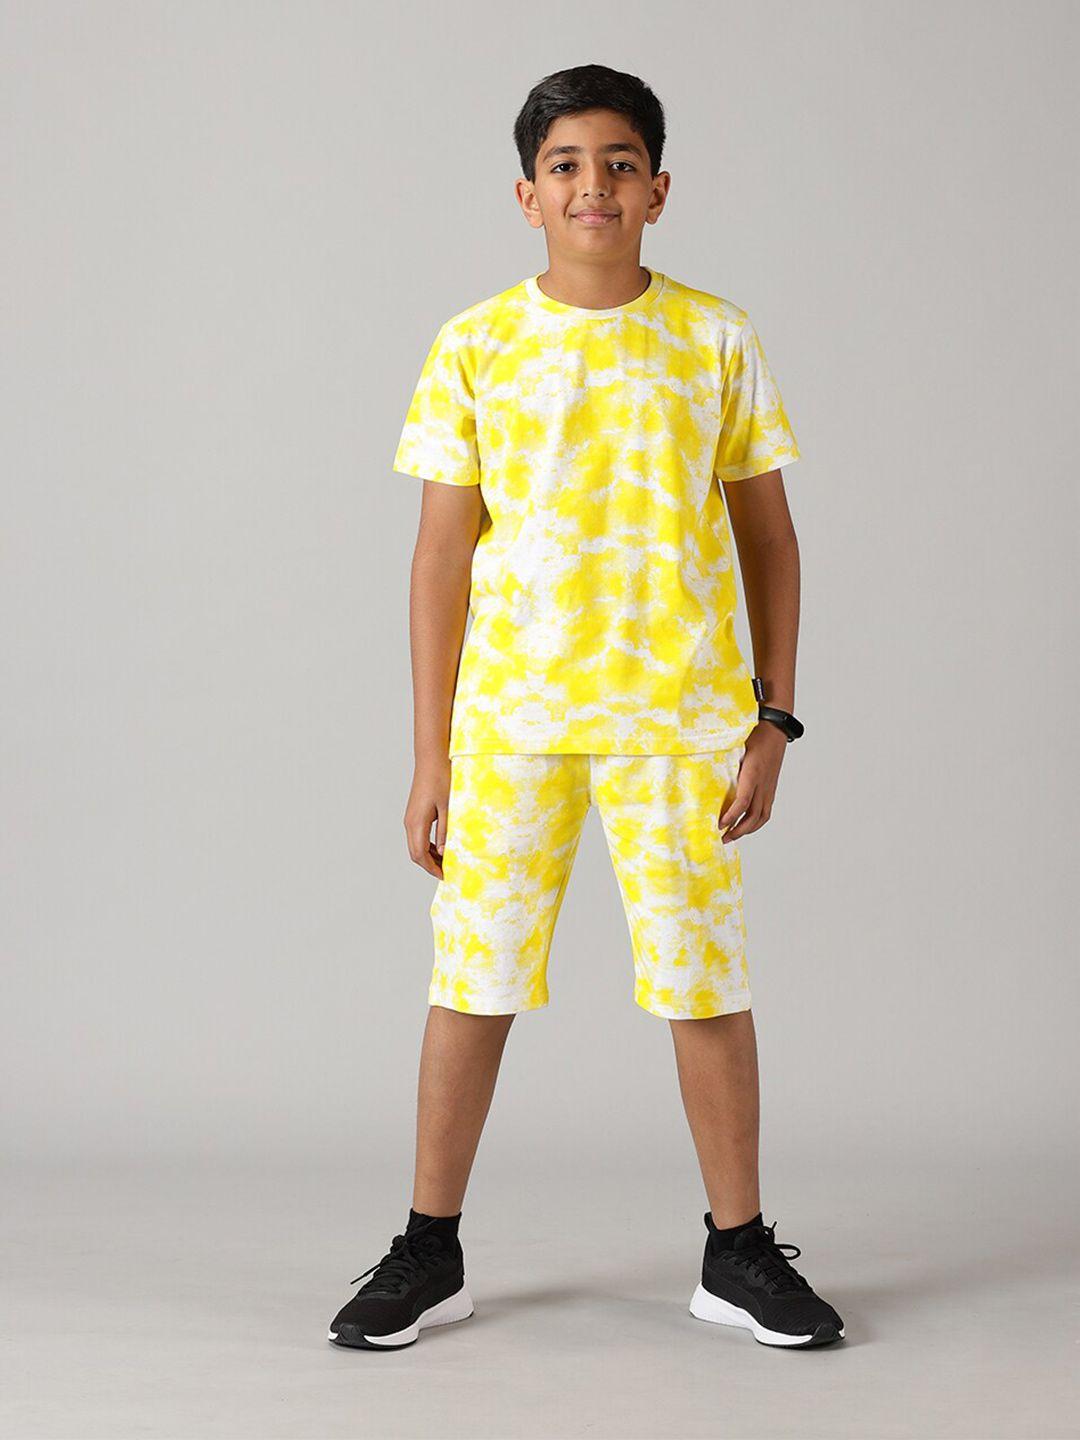 KiddoPanti Boys Tie & Dye Printed Pure Cotton T-shirt with Shorts Clothing Set